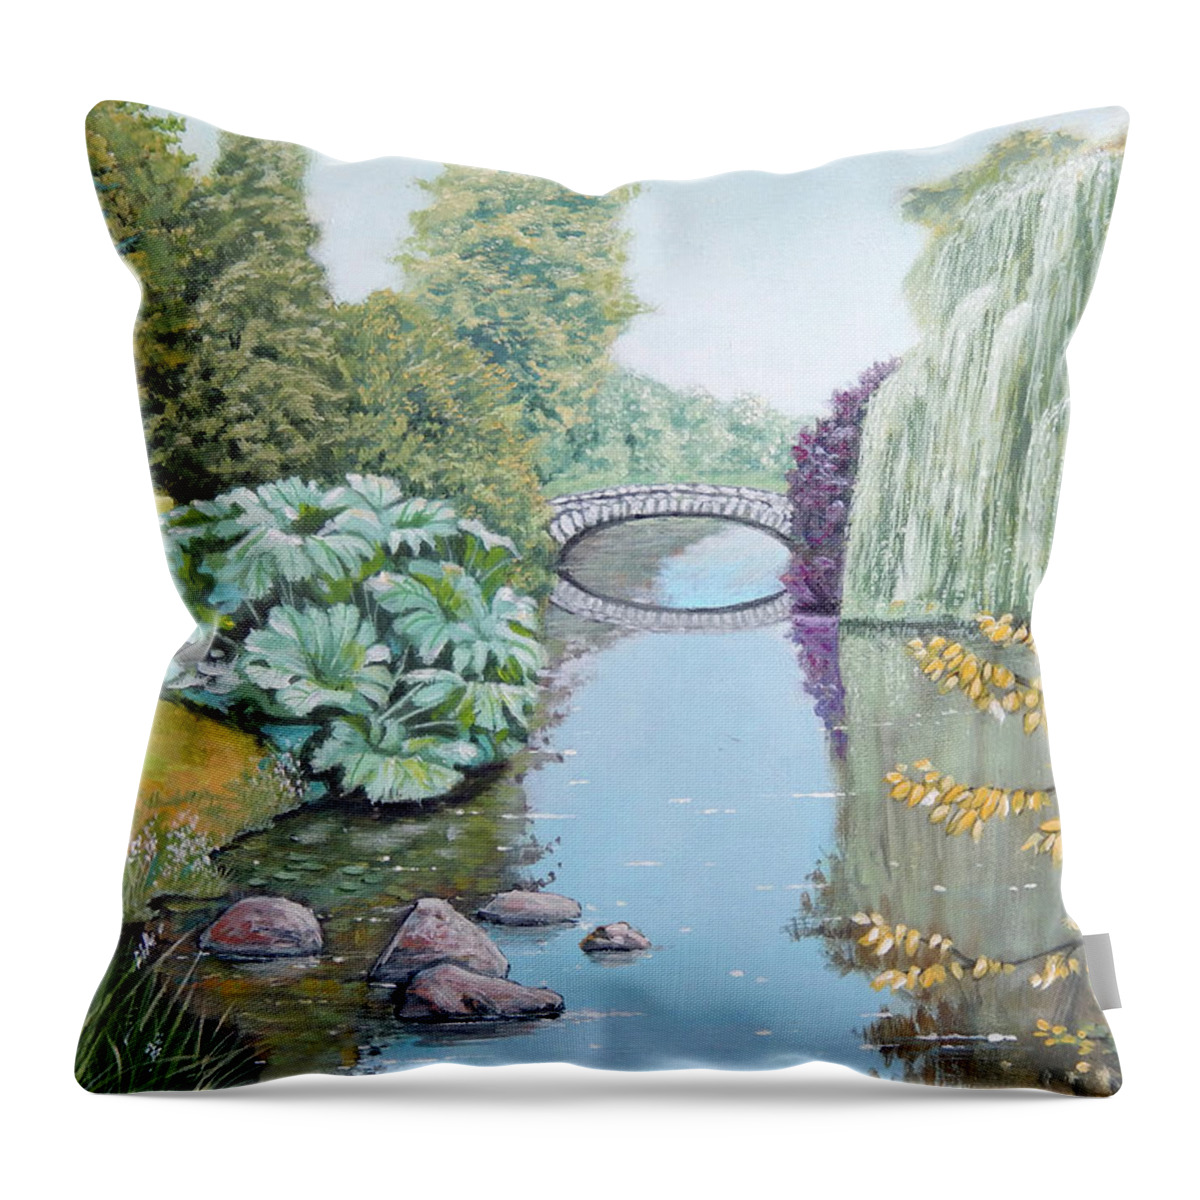 Garden Throw Pillow featuring the painting The Eye of the Garden by Arie Van der Wijst